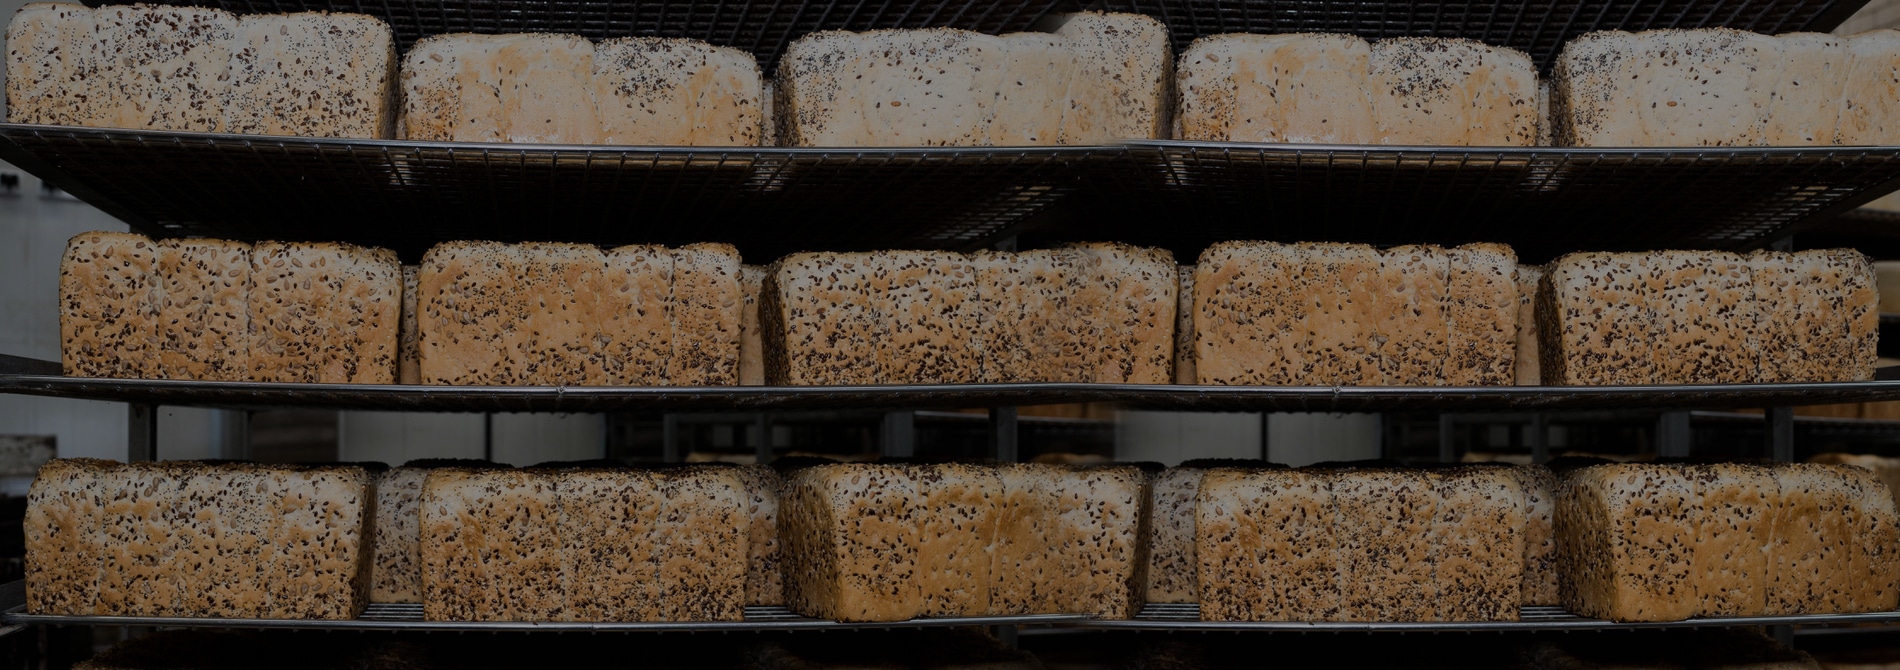 Bread Suppliers Melbourne